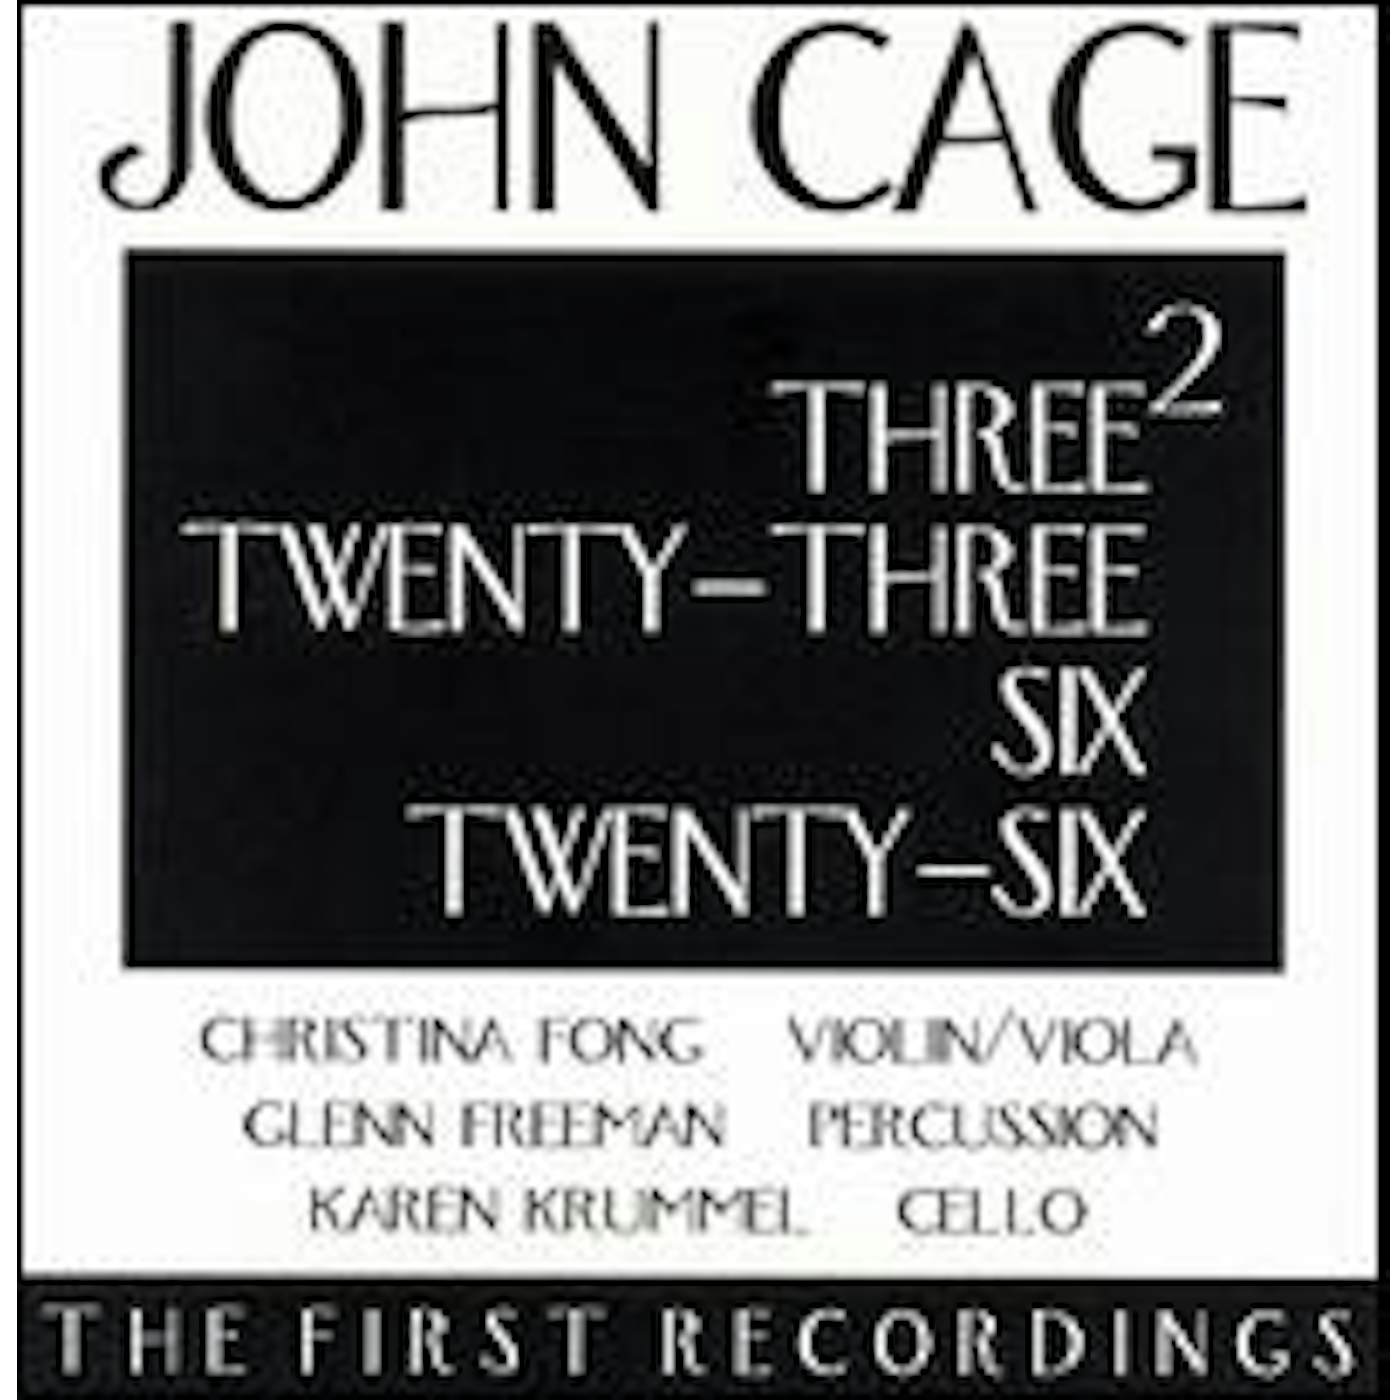 John Cage THREE2 TWENTY-THREE SIX TWENTY-SIX CD